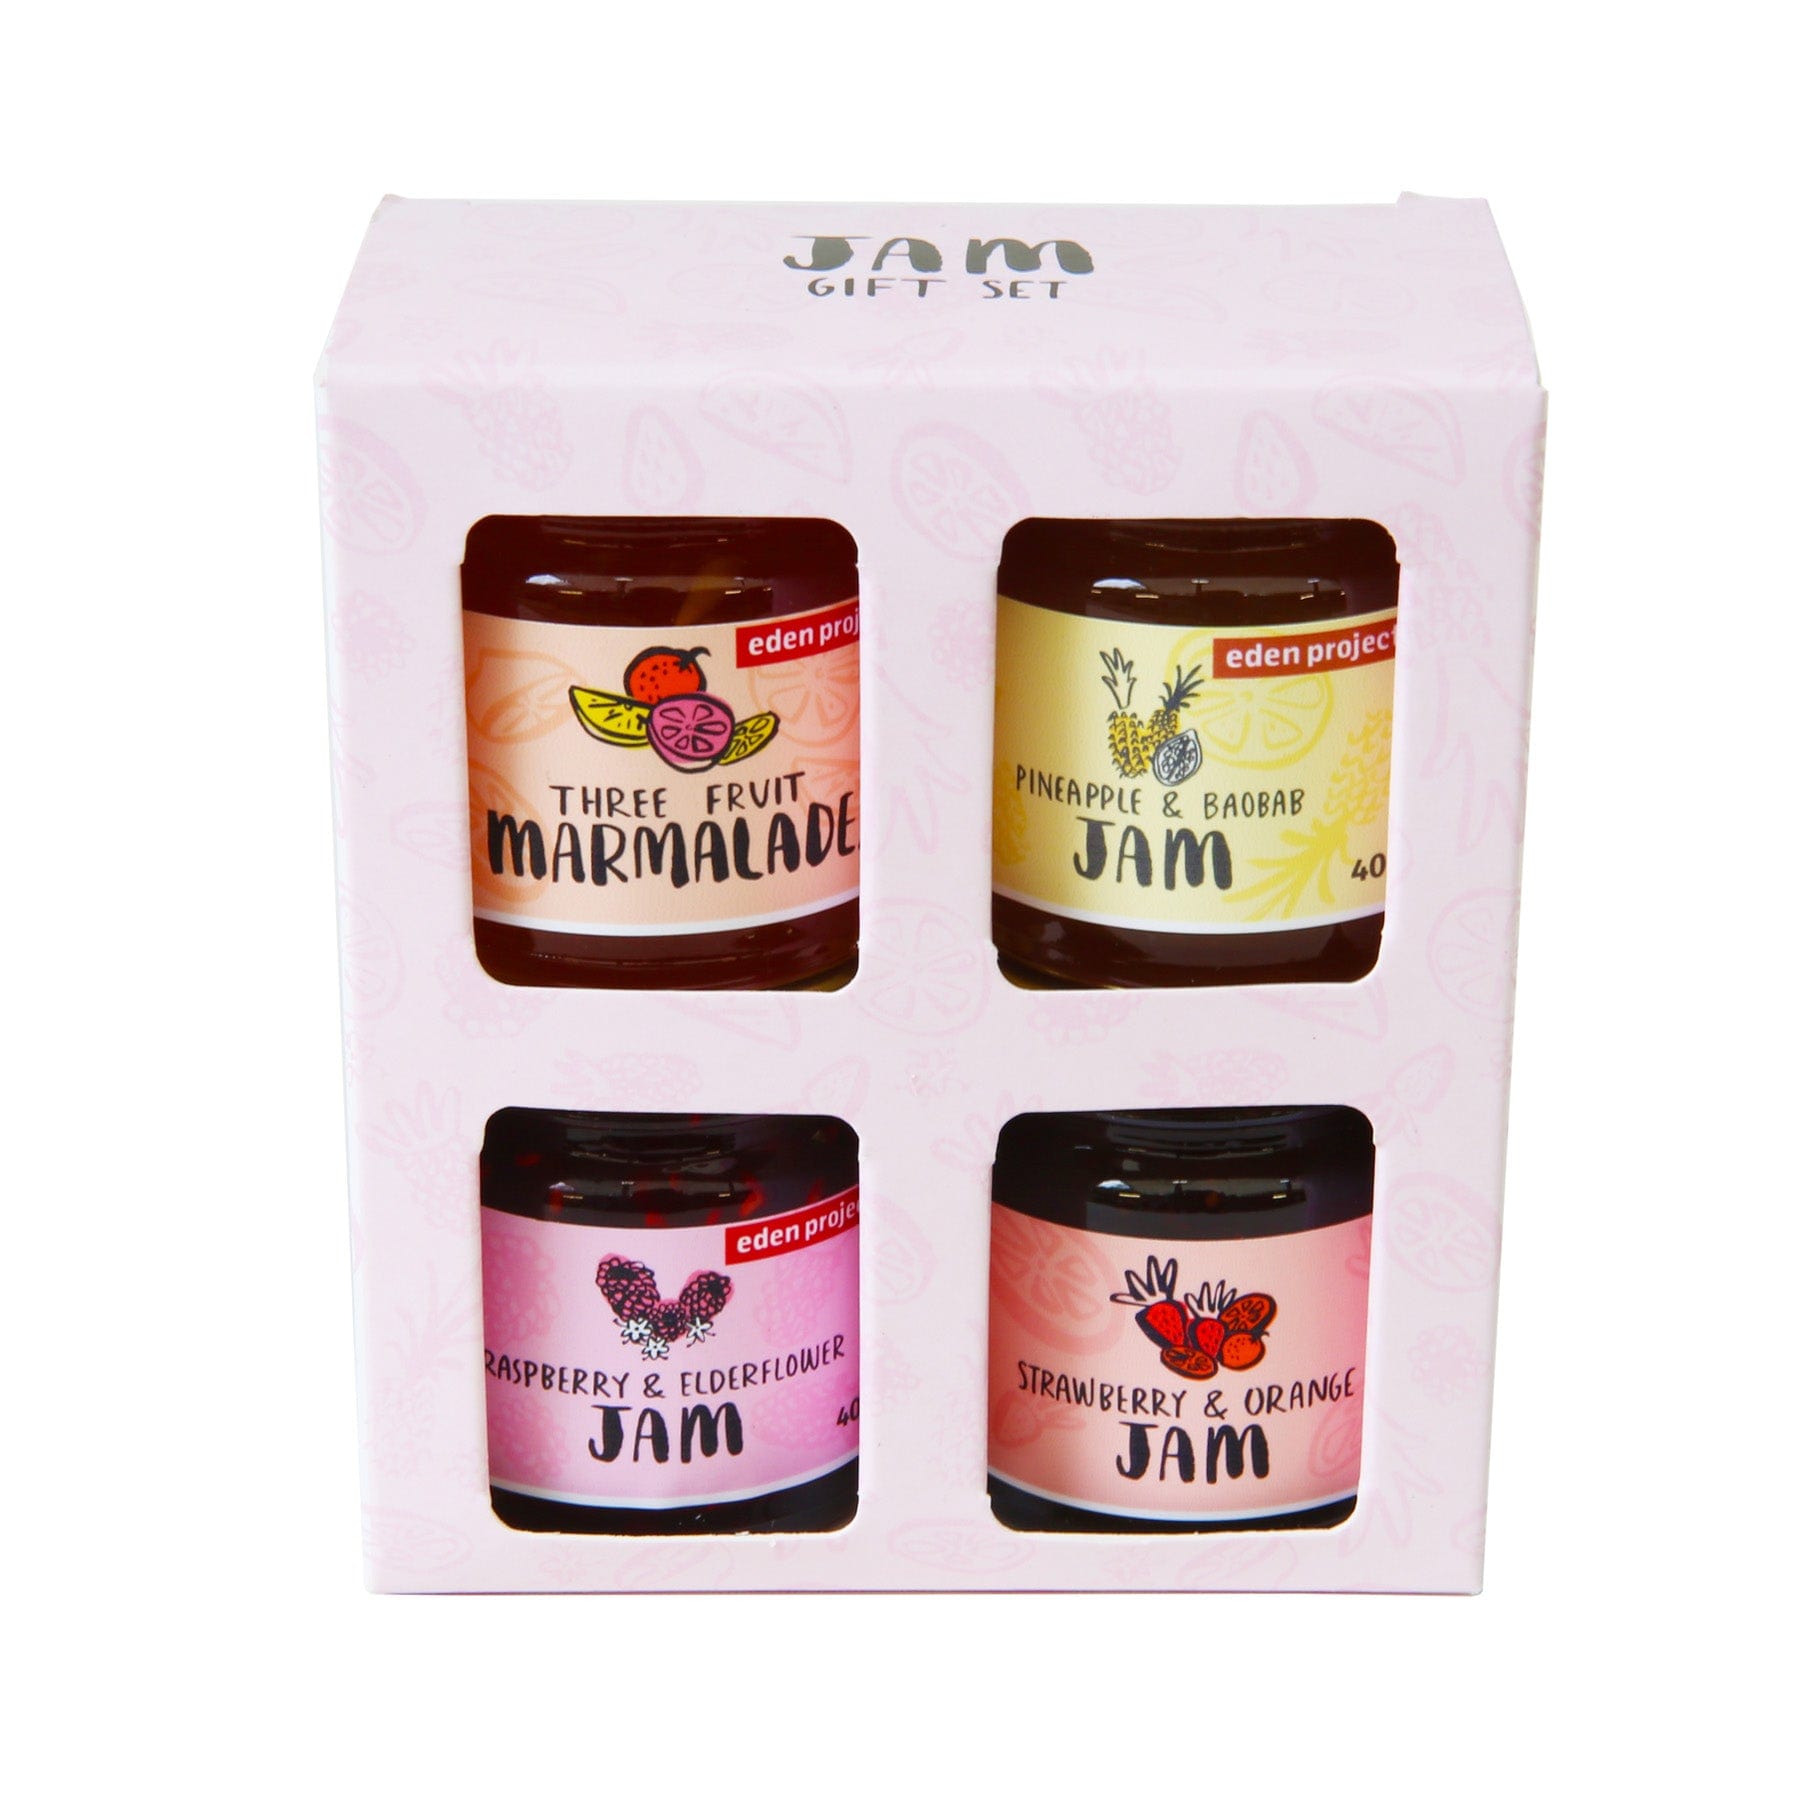 Mini jam gift set